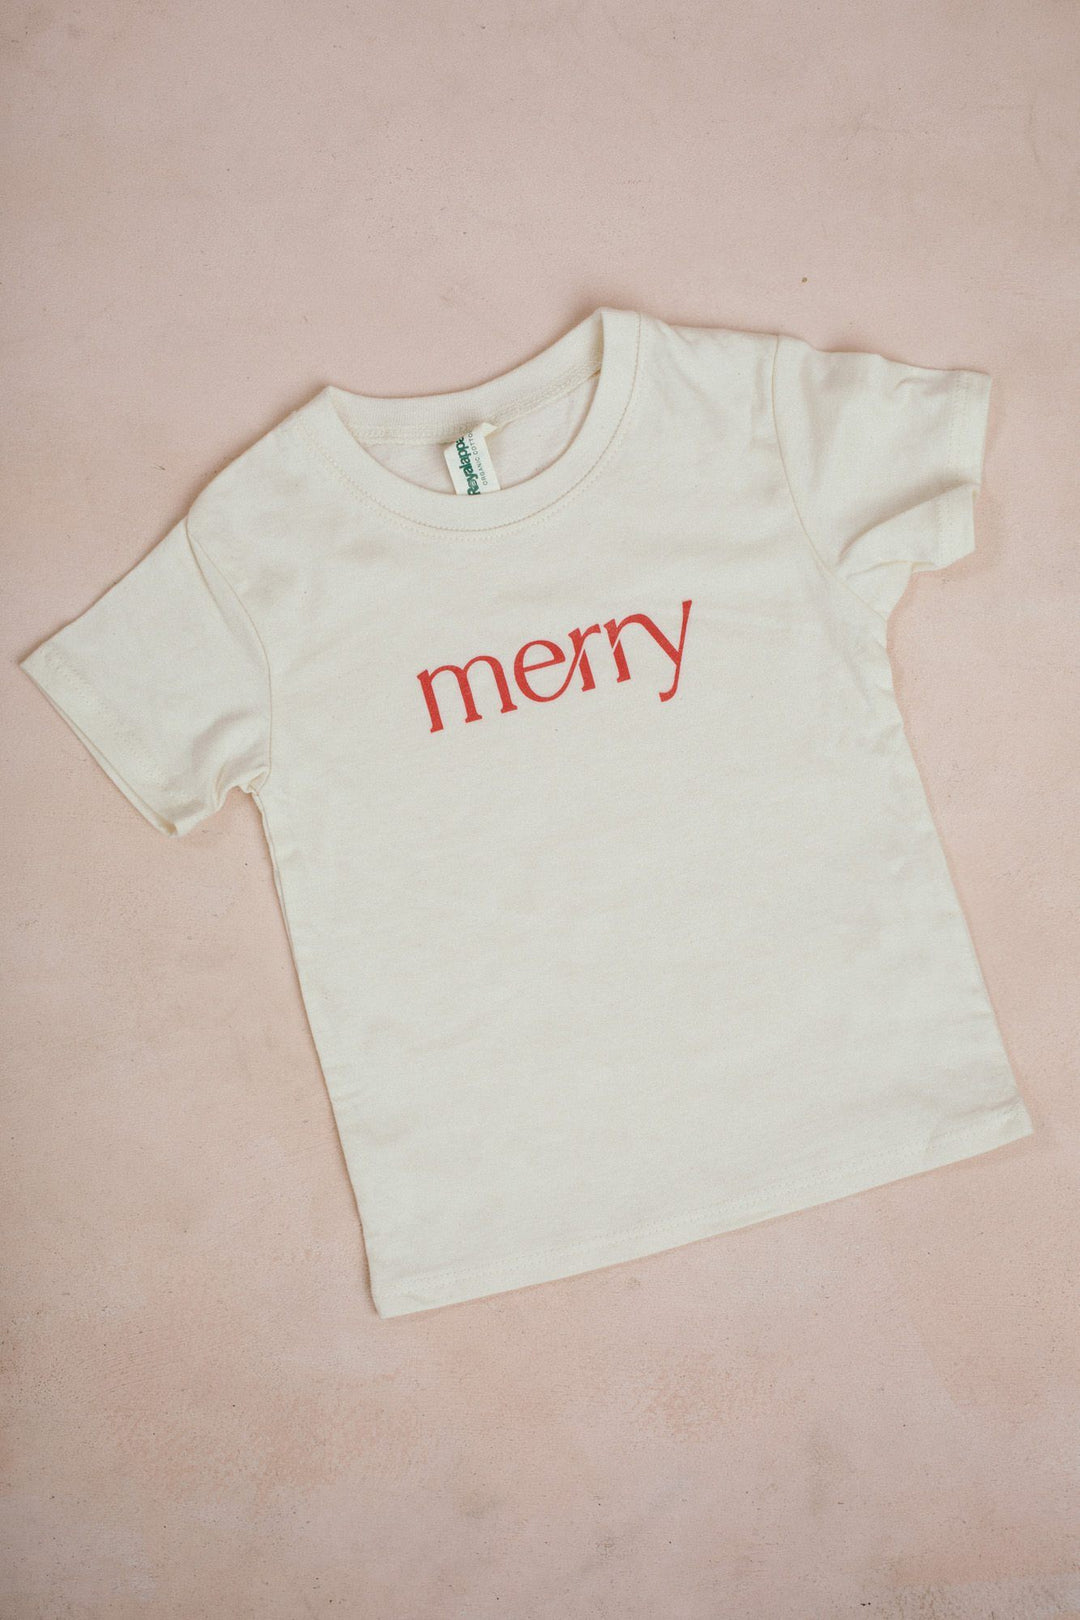 Merry Organic Kids T-Shirt Kids Clothing Gladfolk Red 18-24M 